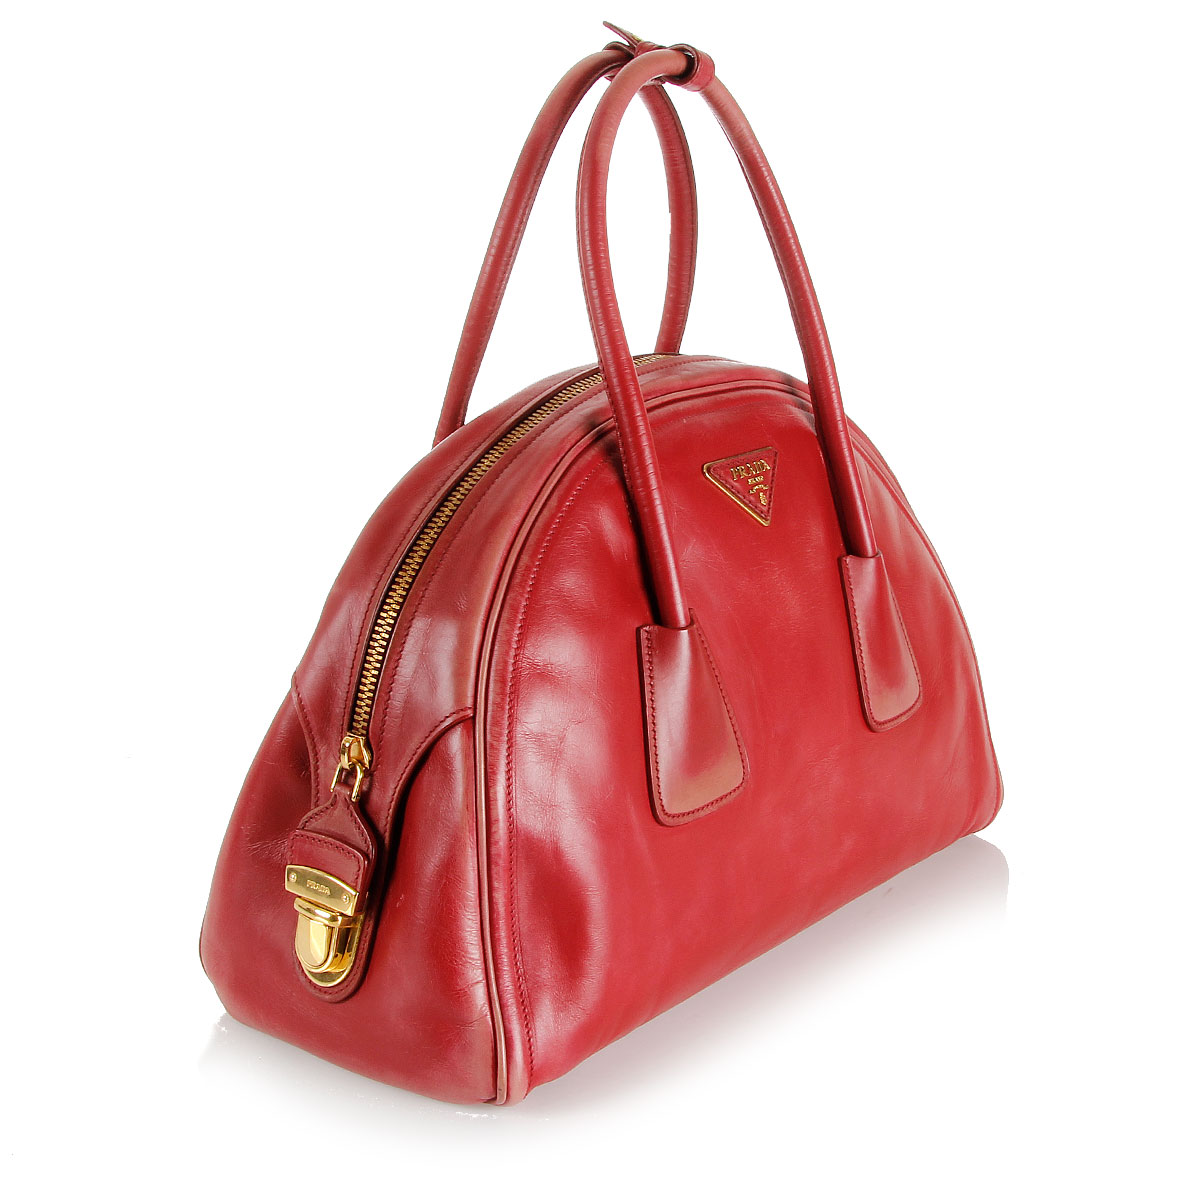 Prada Women Leather holdall bag vintage effect - Spence Outlet